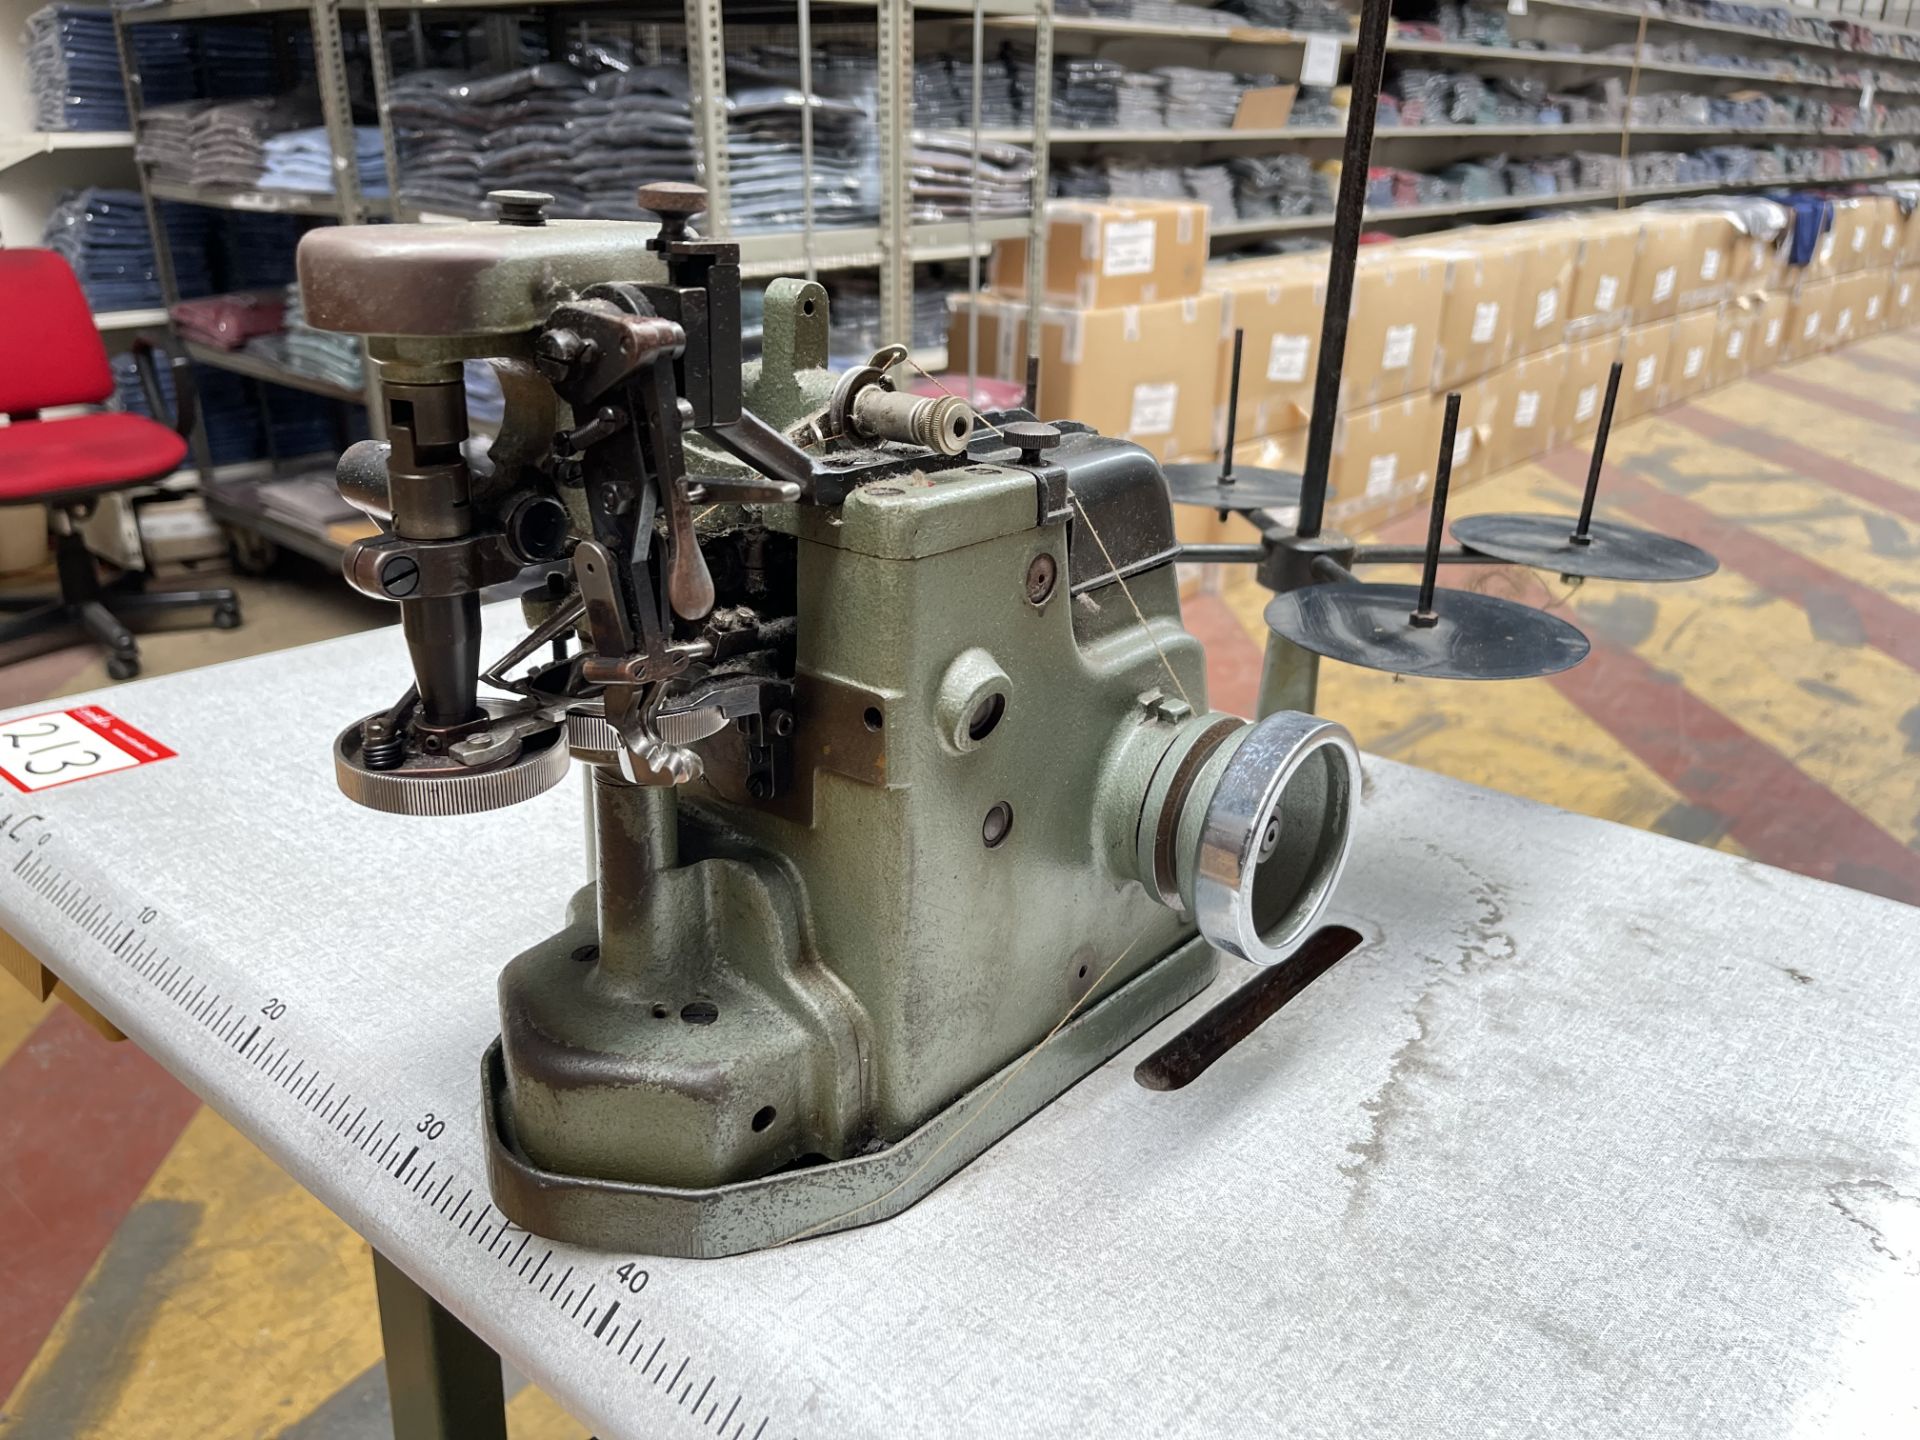 Rimoldi 054-04-01 Cup Seamer Sewing machine. S/No 382125 - Image 3 of 6